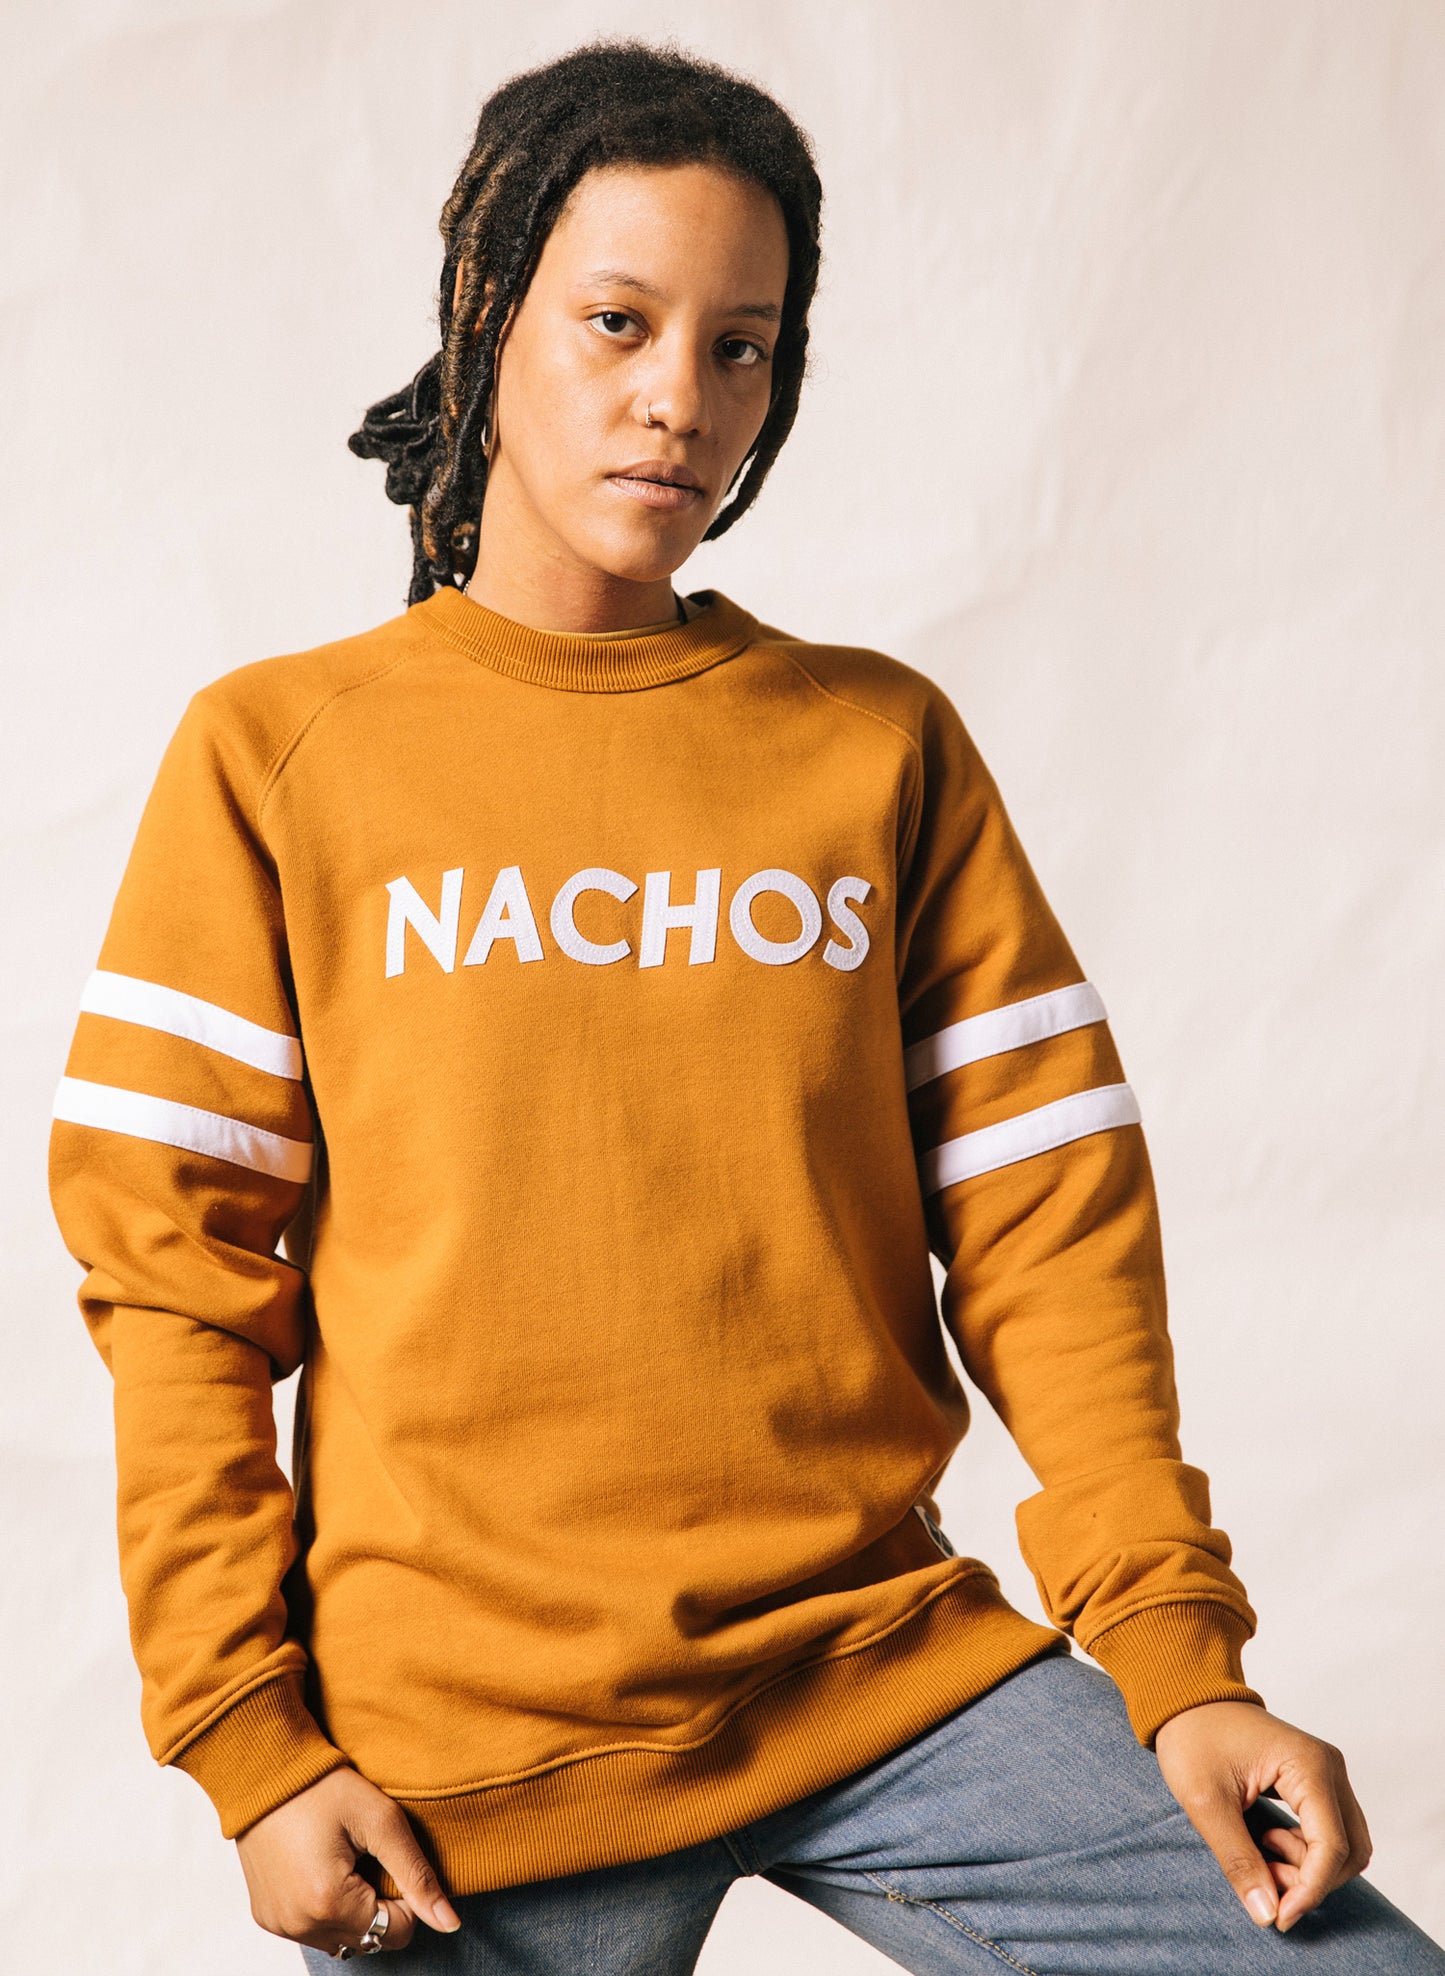 NACHOS Felt Letter Vintage Style Hemp Organic Cotton Crewneck Sweatshirt for Mexican Food Lovers and Foodies